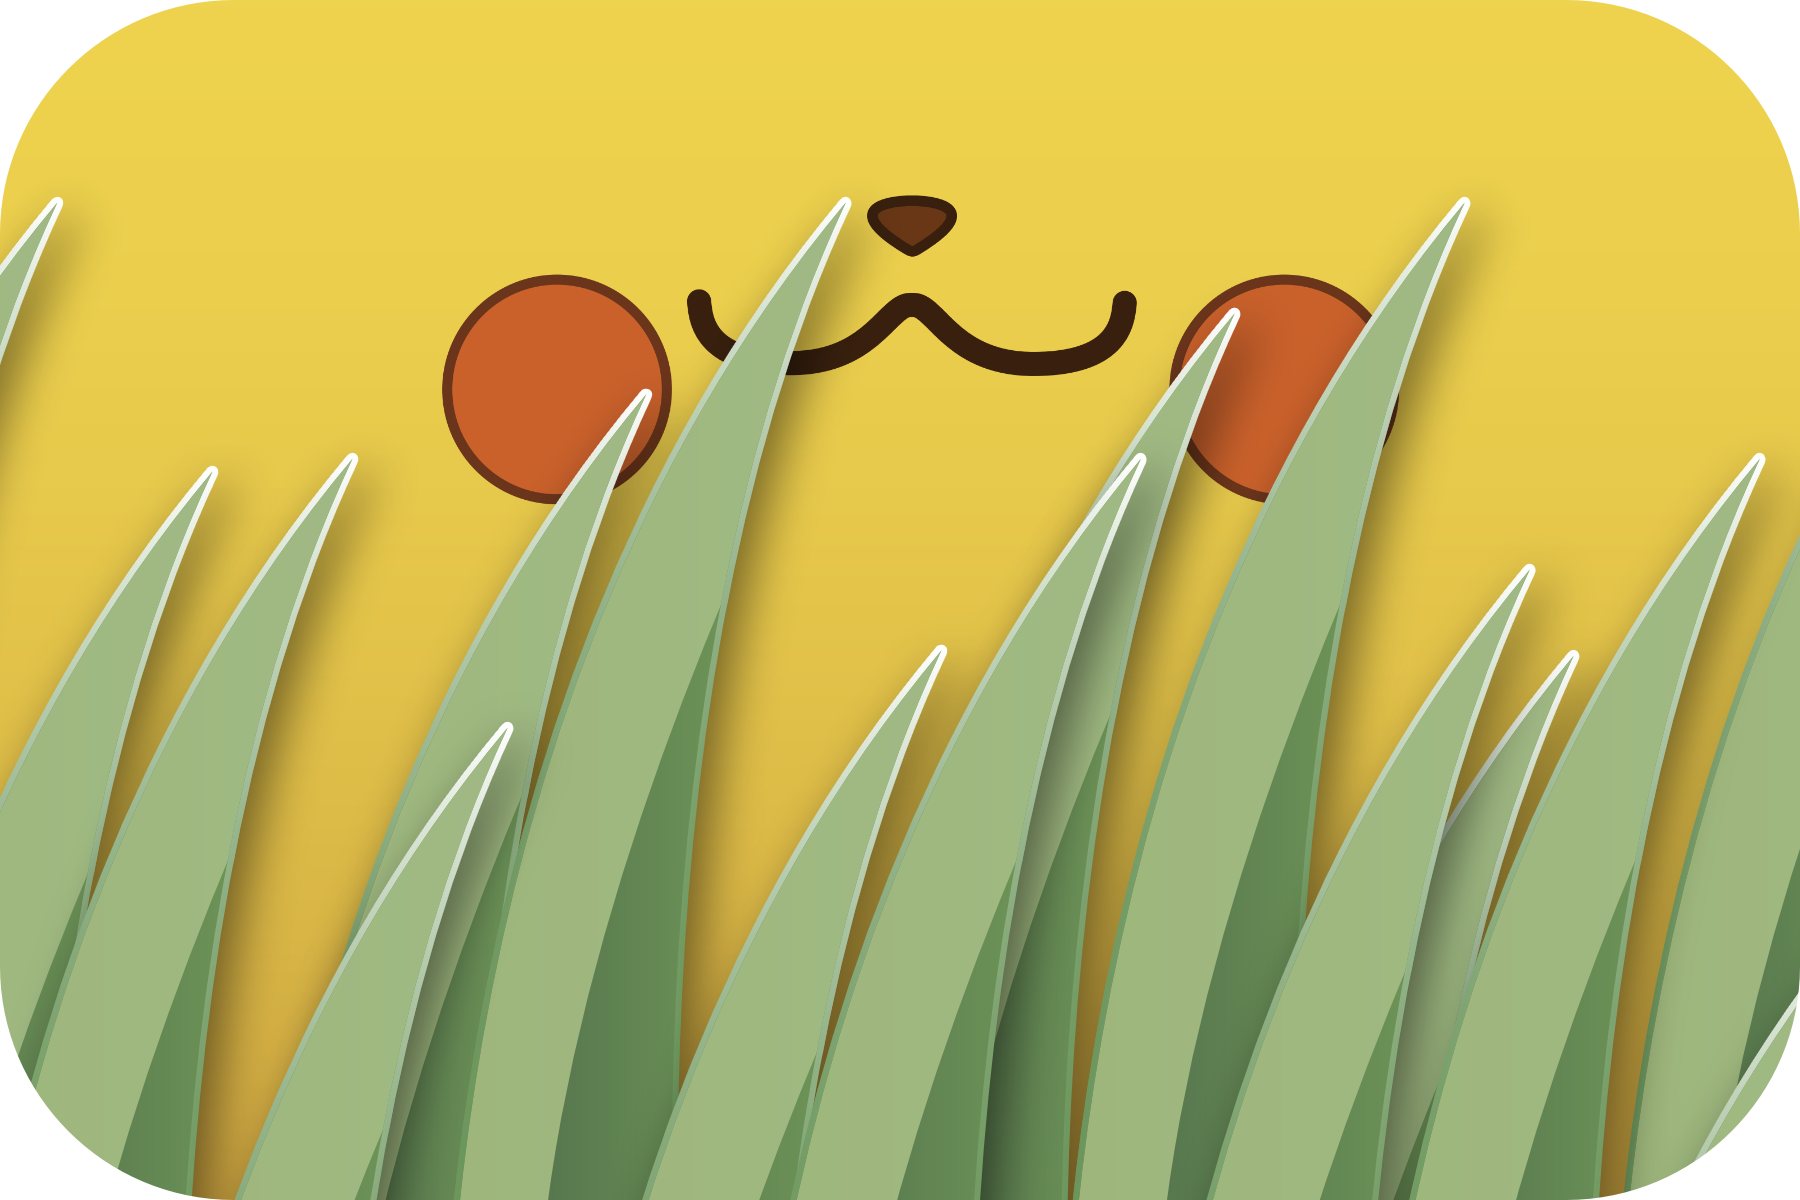 Logo invoking Pikachu hiding in the grass